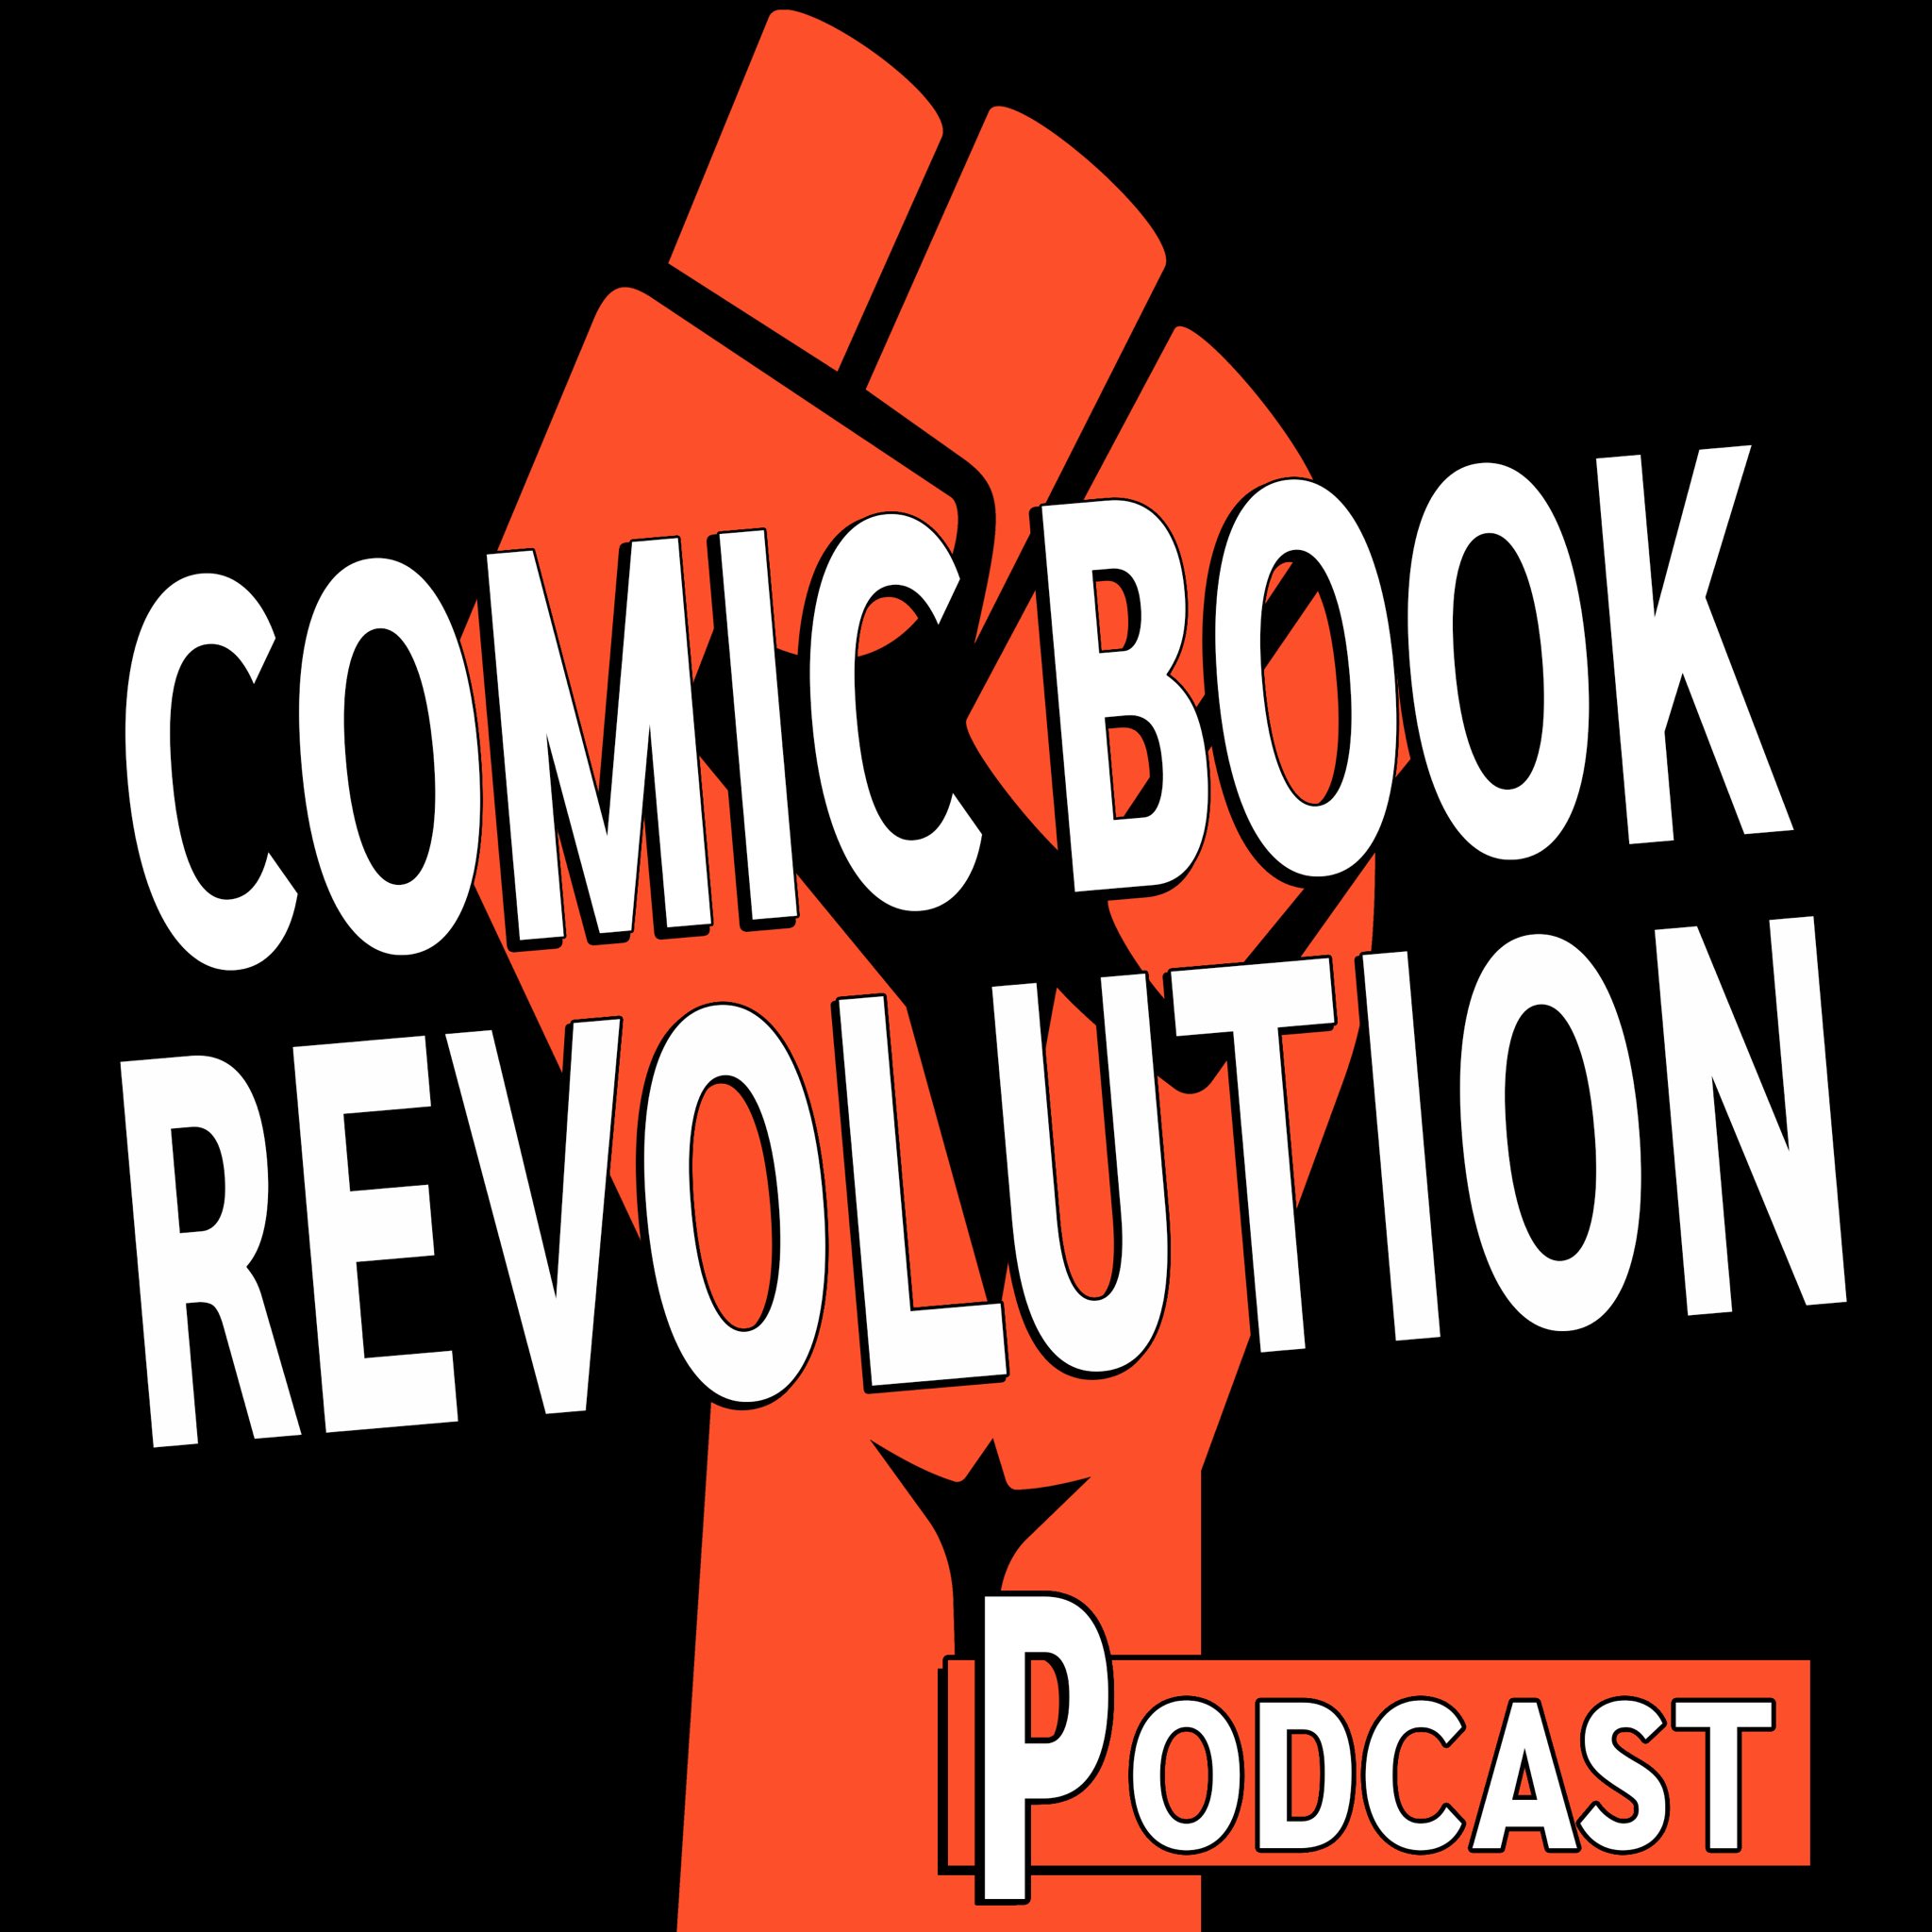 Godzilla vs. Power Rangers #1 Review - Comic Book Revolution Podcast Episode 91